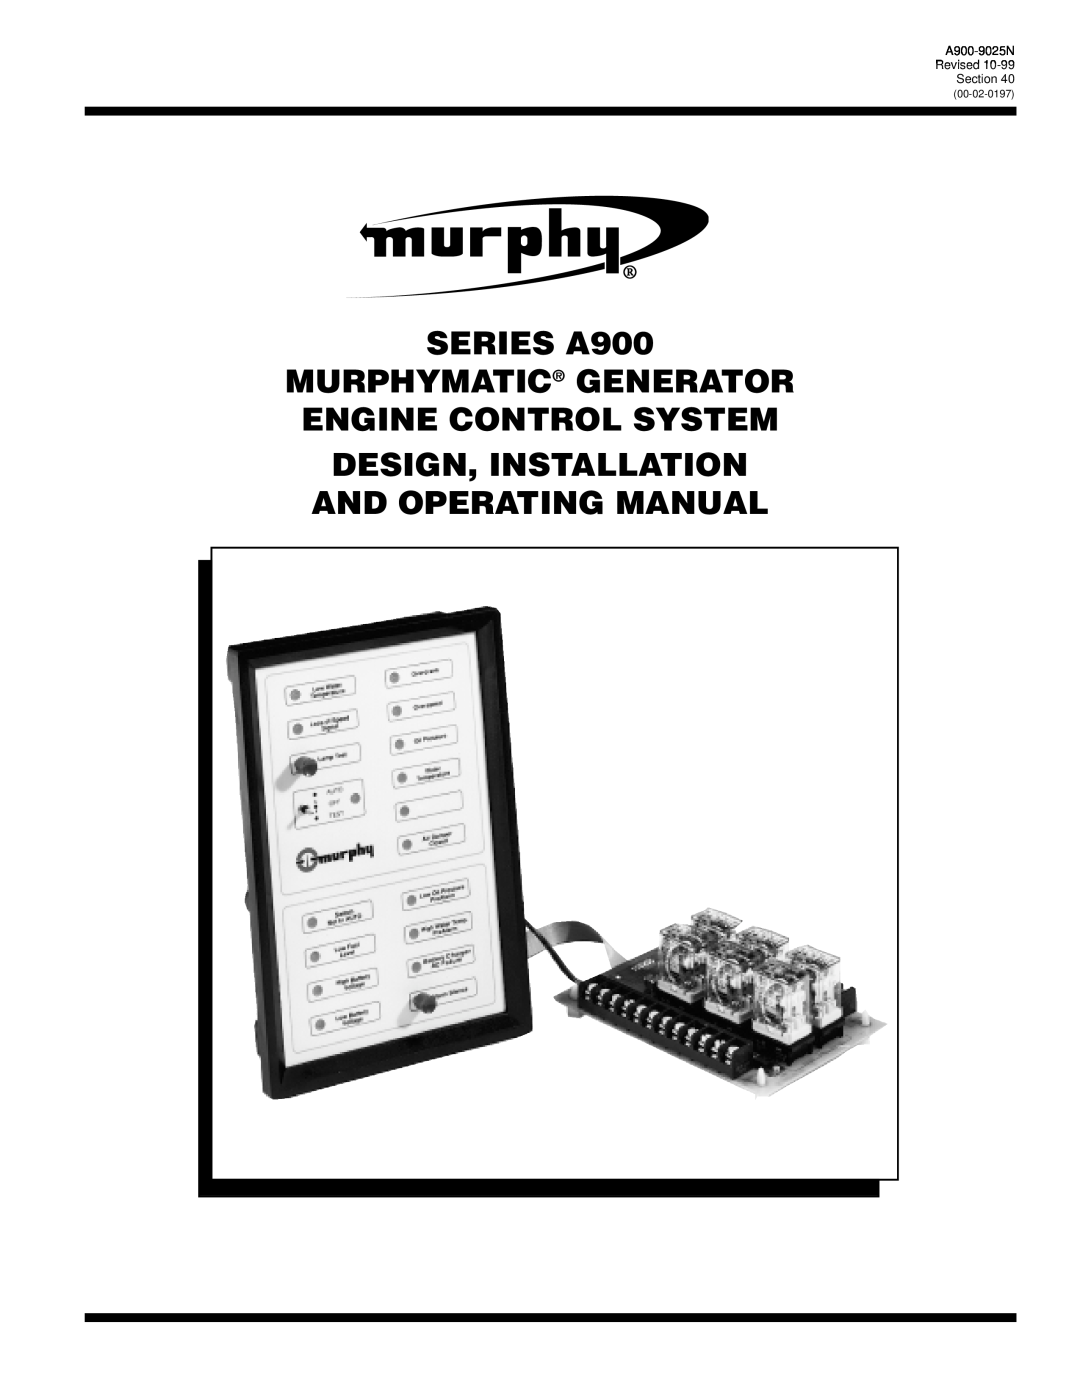 Murphy A900 Series manual SERIES A900 MURPHYMATIC GENERATOR, Engine Control System Design, Installation 